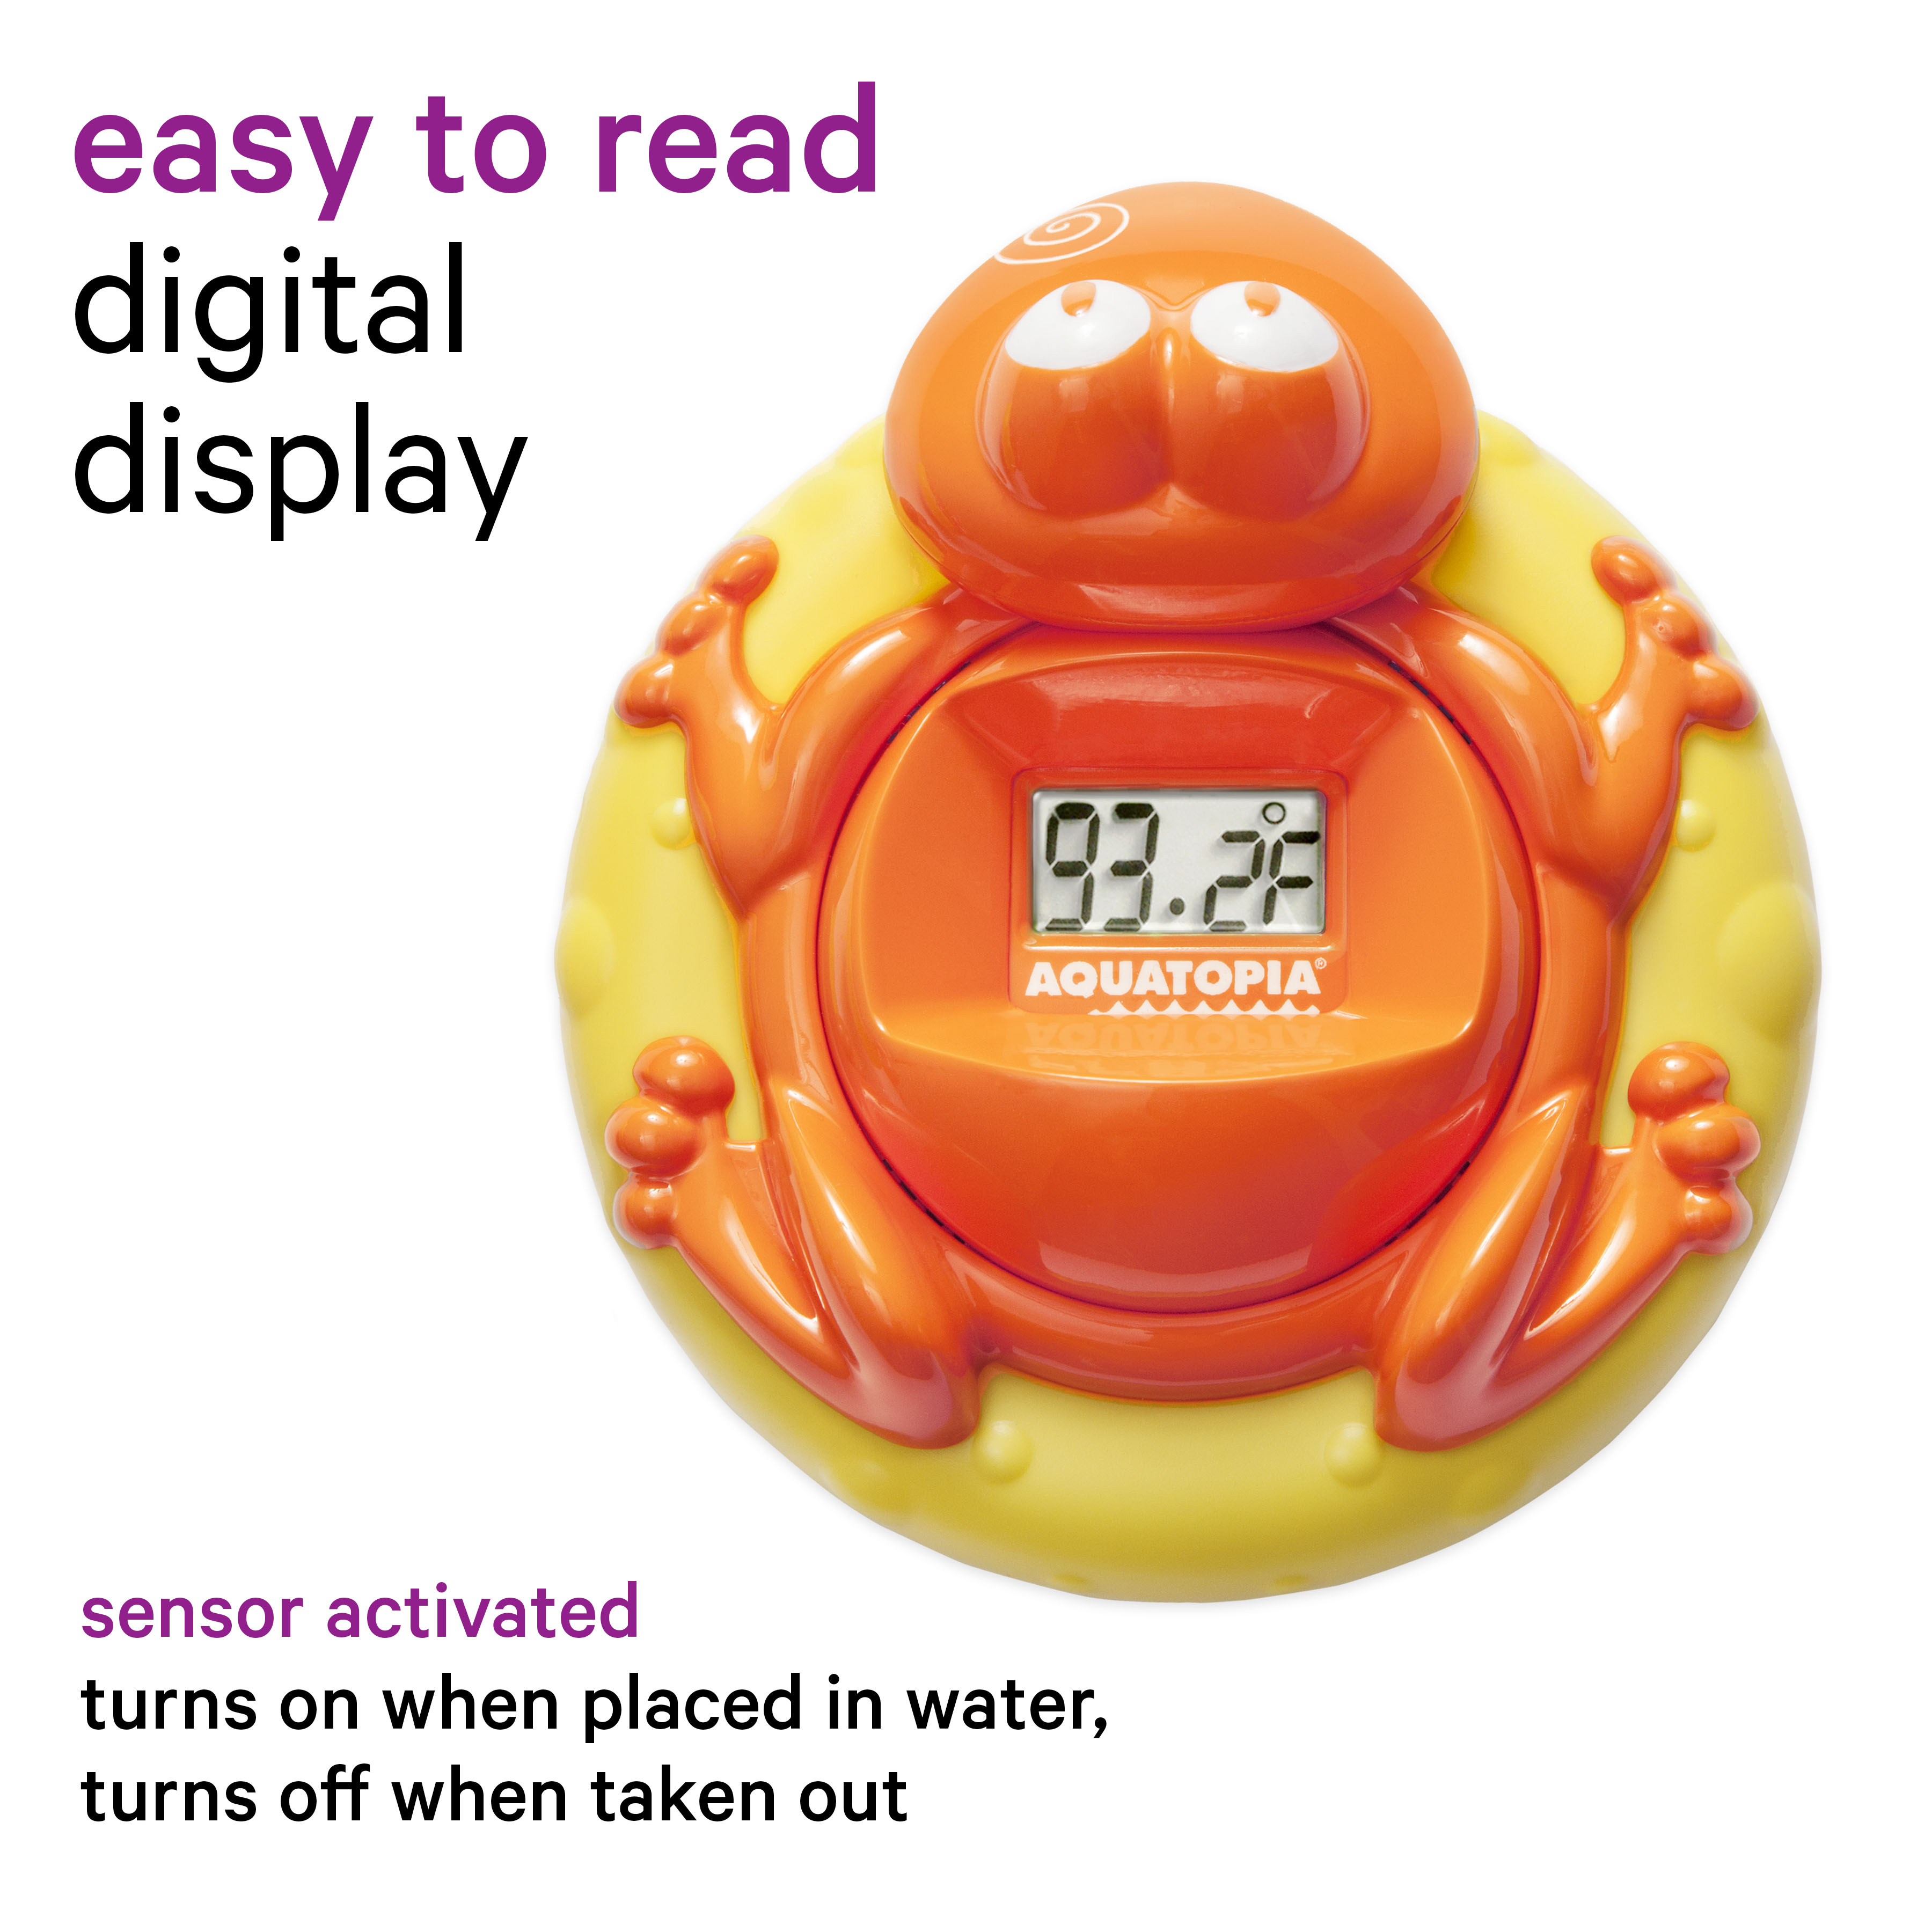 Aquatopia Bath Thermometer, Digital Audible Alarm, Orange - image 2 of 6